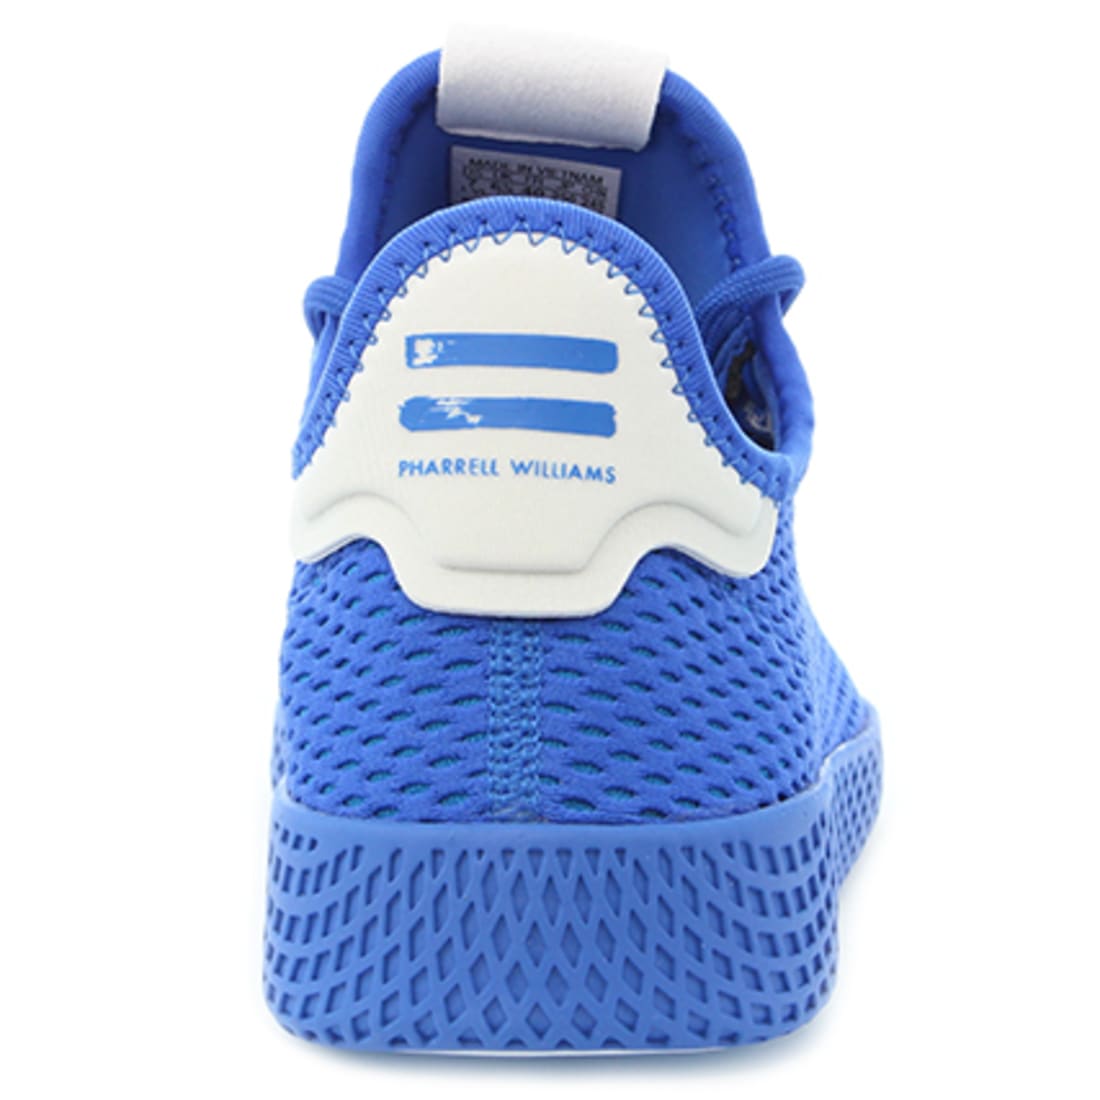 - Baskets HU Pharrell Williams CP9766 Blue Footwear White - LaBoutiqueOfficielle.com